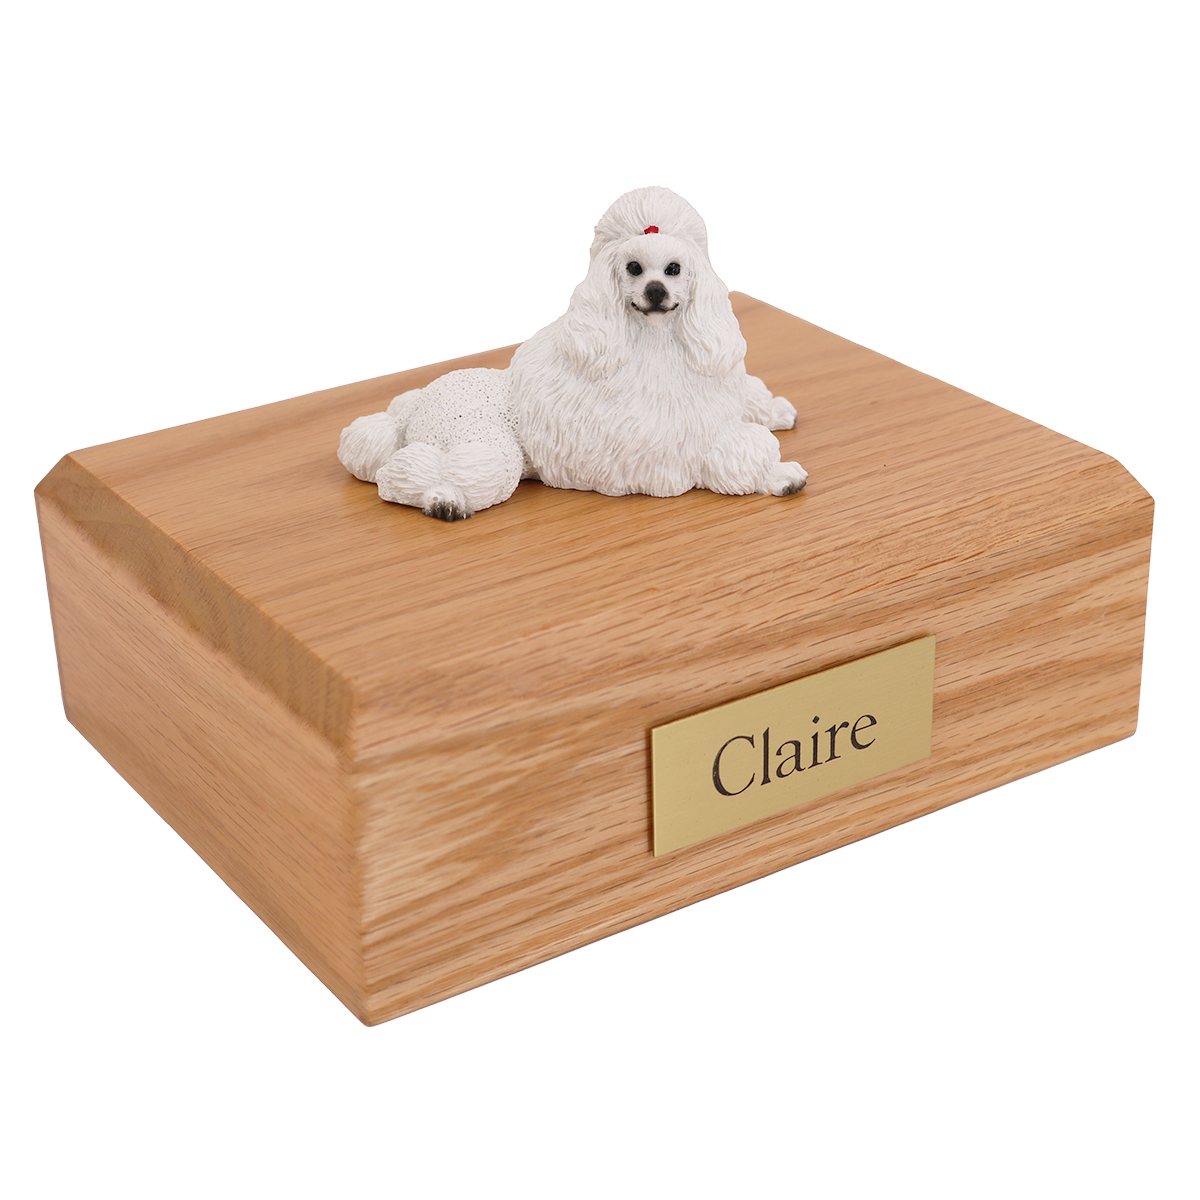 Dog, Poodle, White - show cut  - Figurine Urn